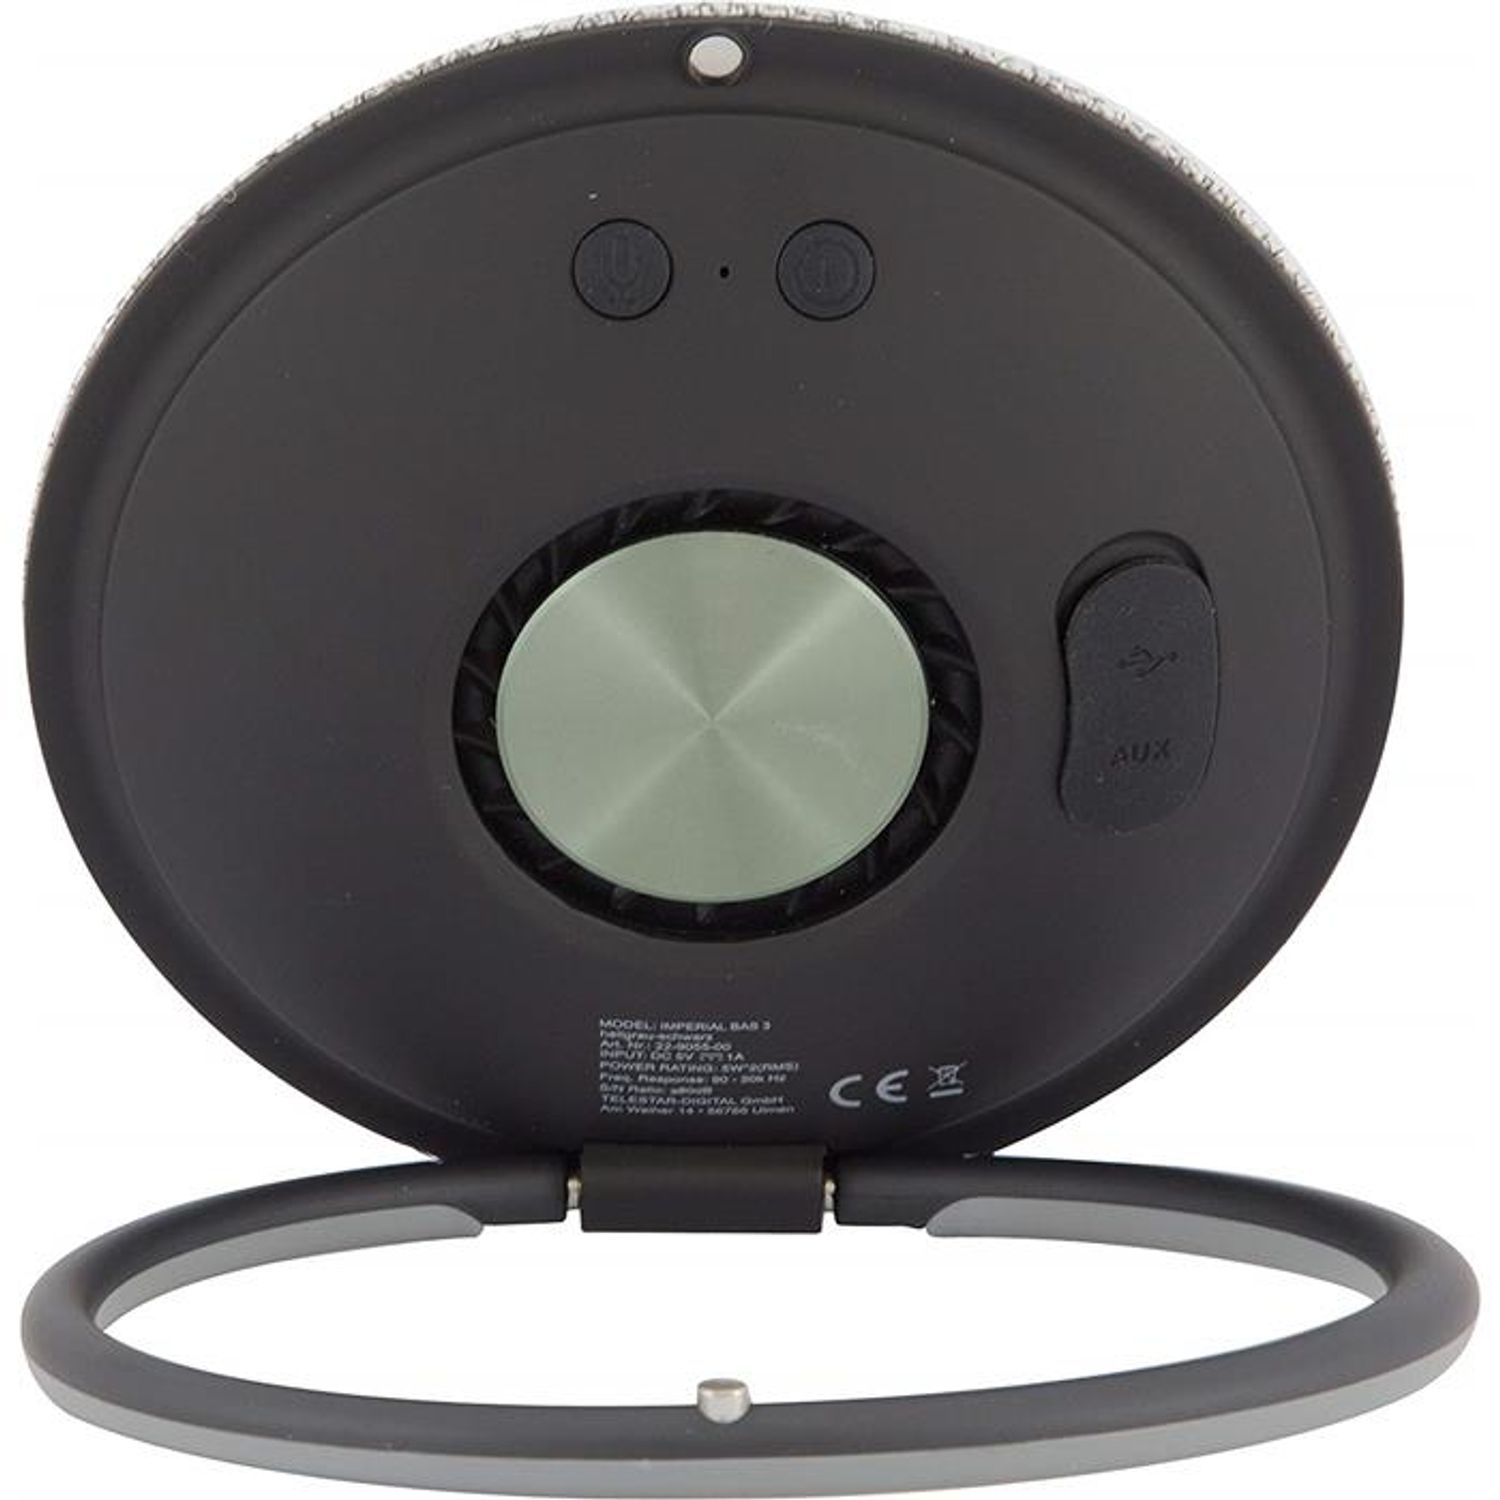 IMPERIAL BAS 3 dunkelgrau/schwarz Bluetooth-Lautsprecher